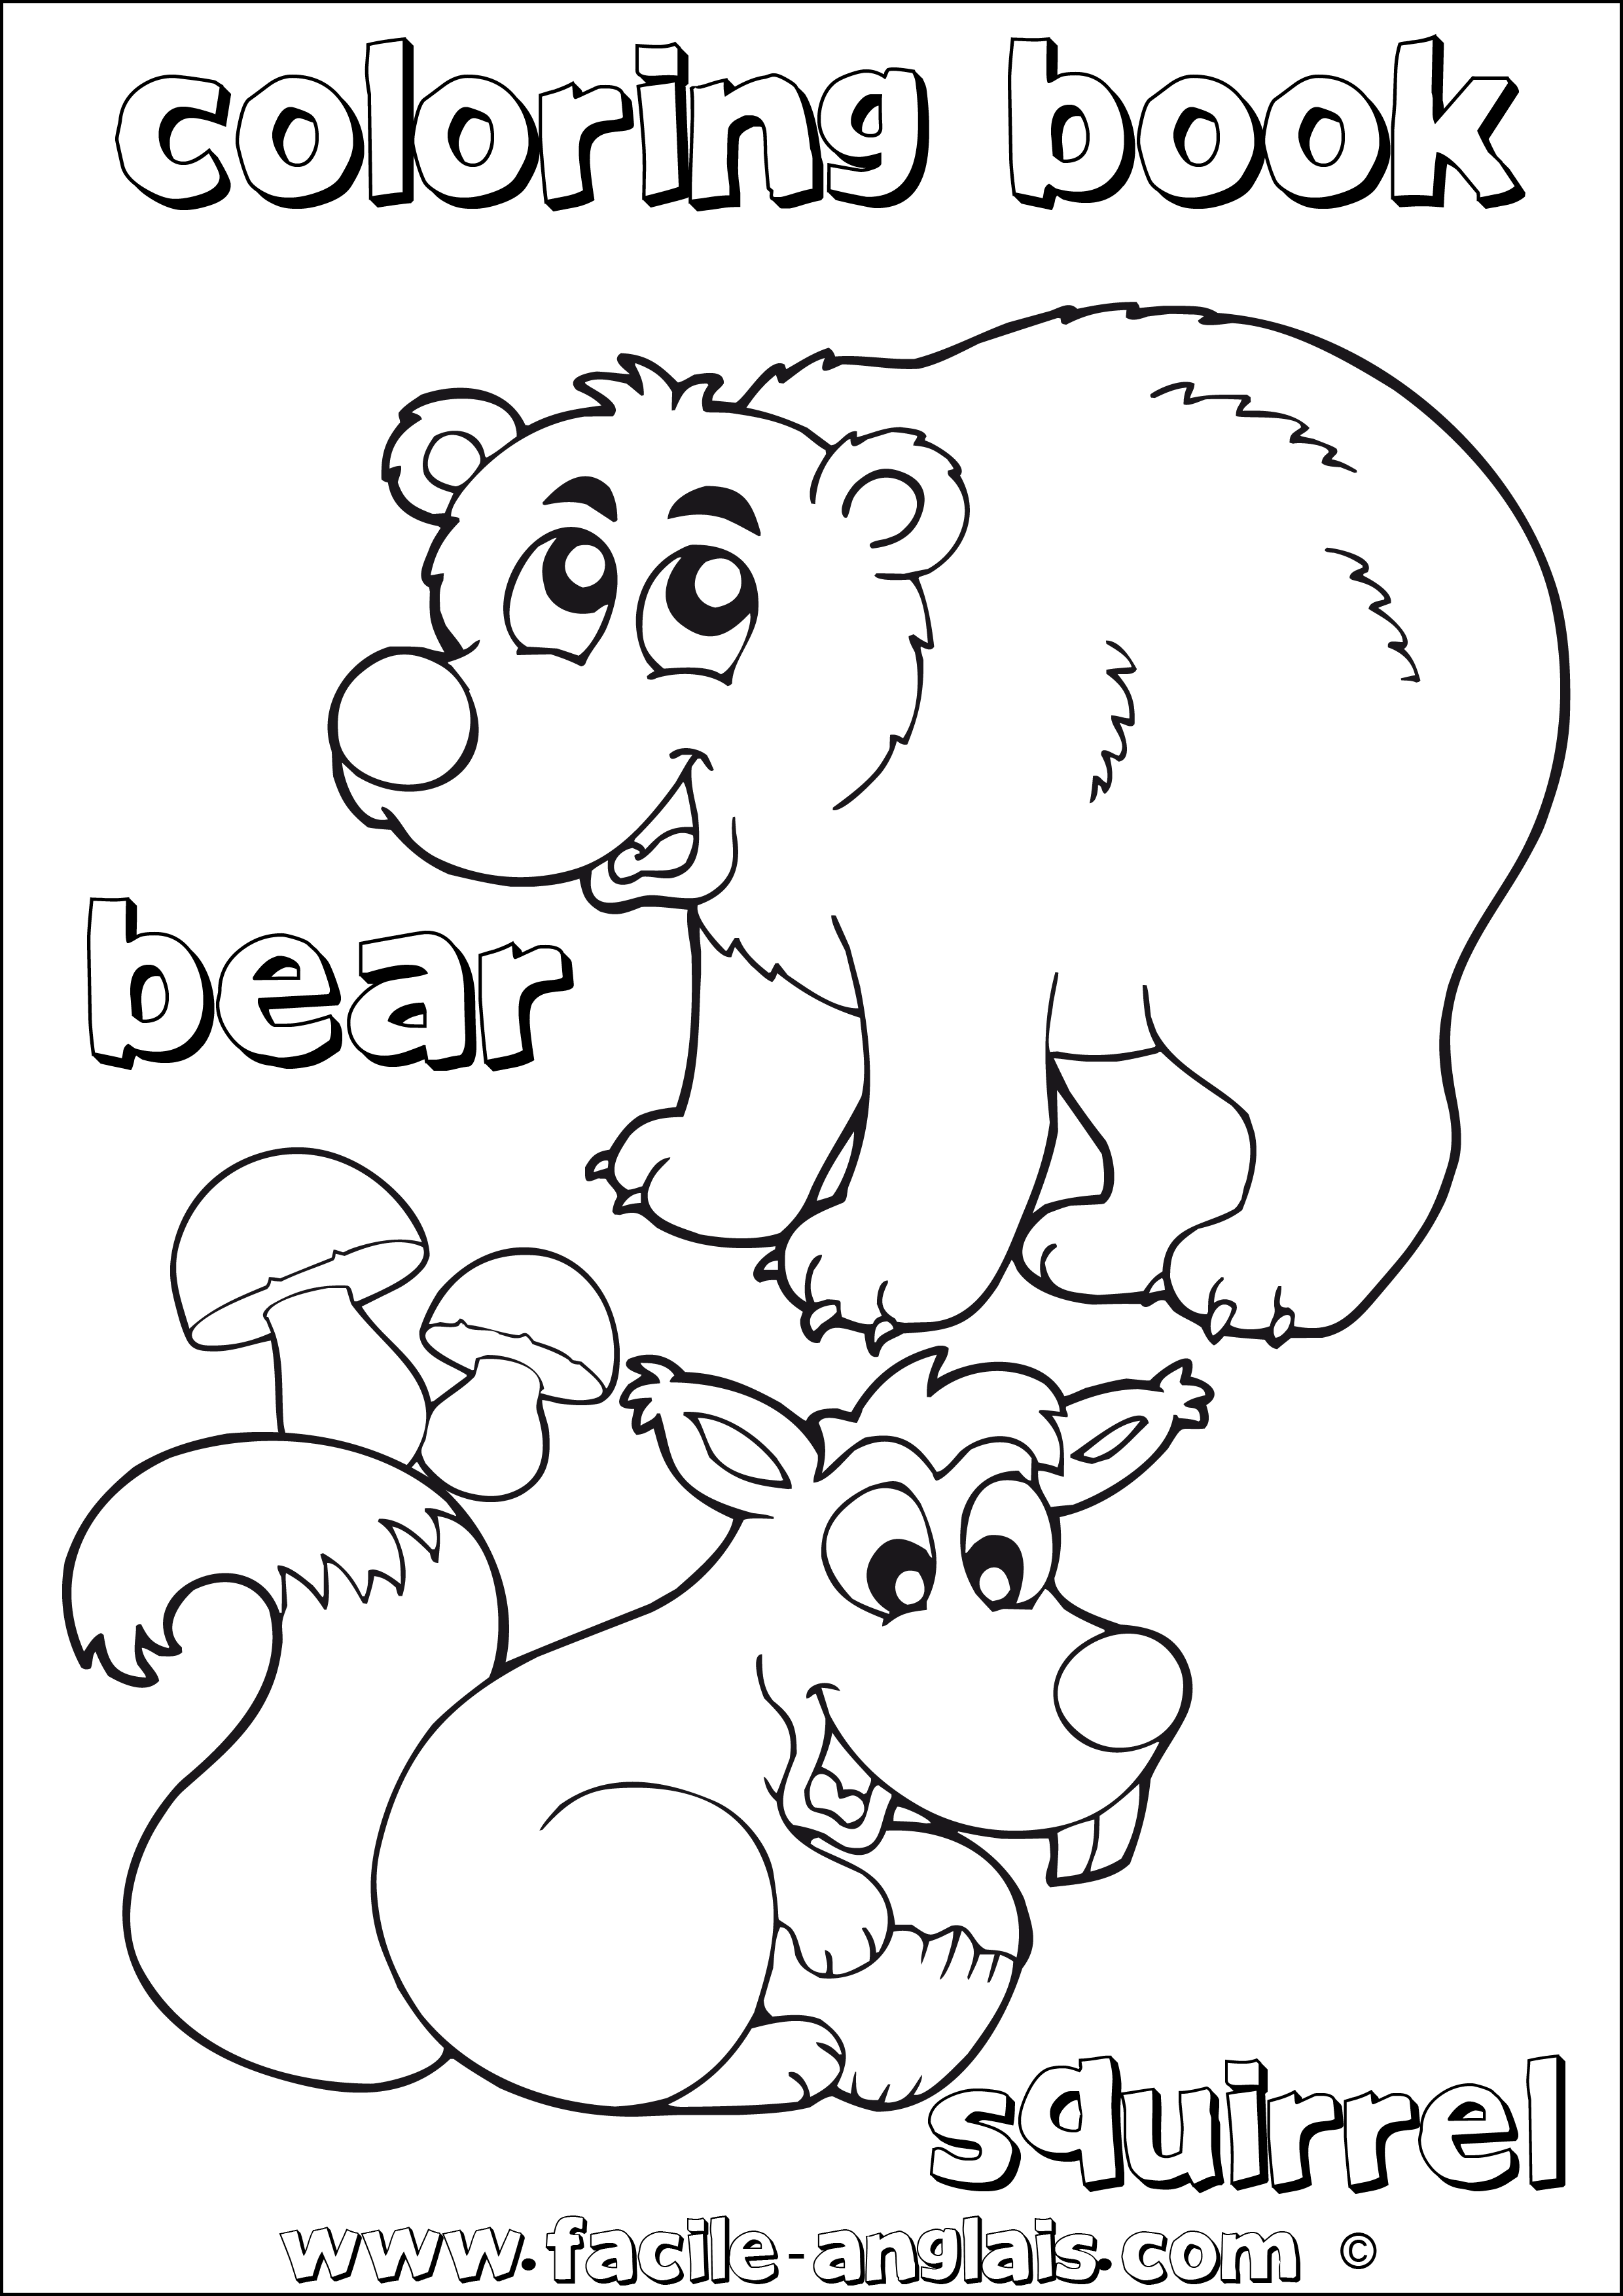 coloring book bear squirrel